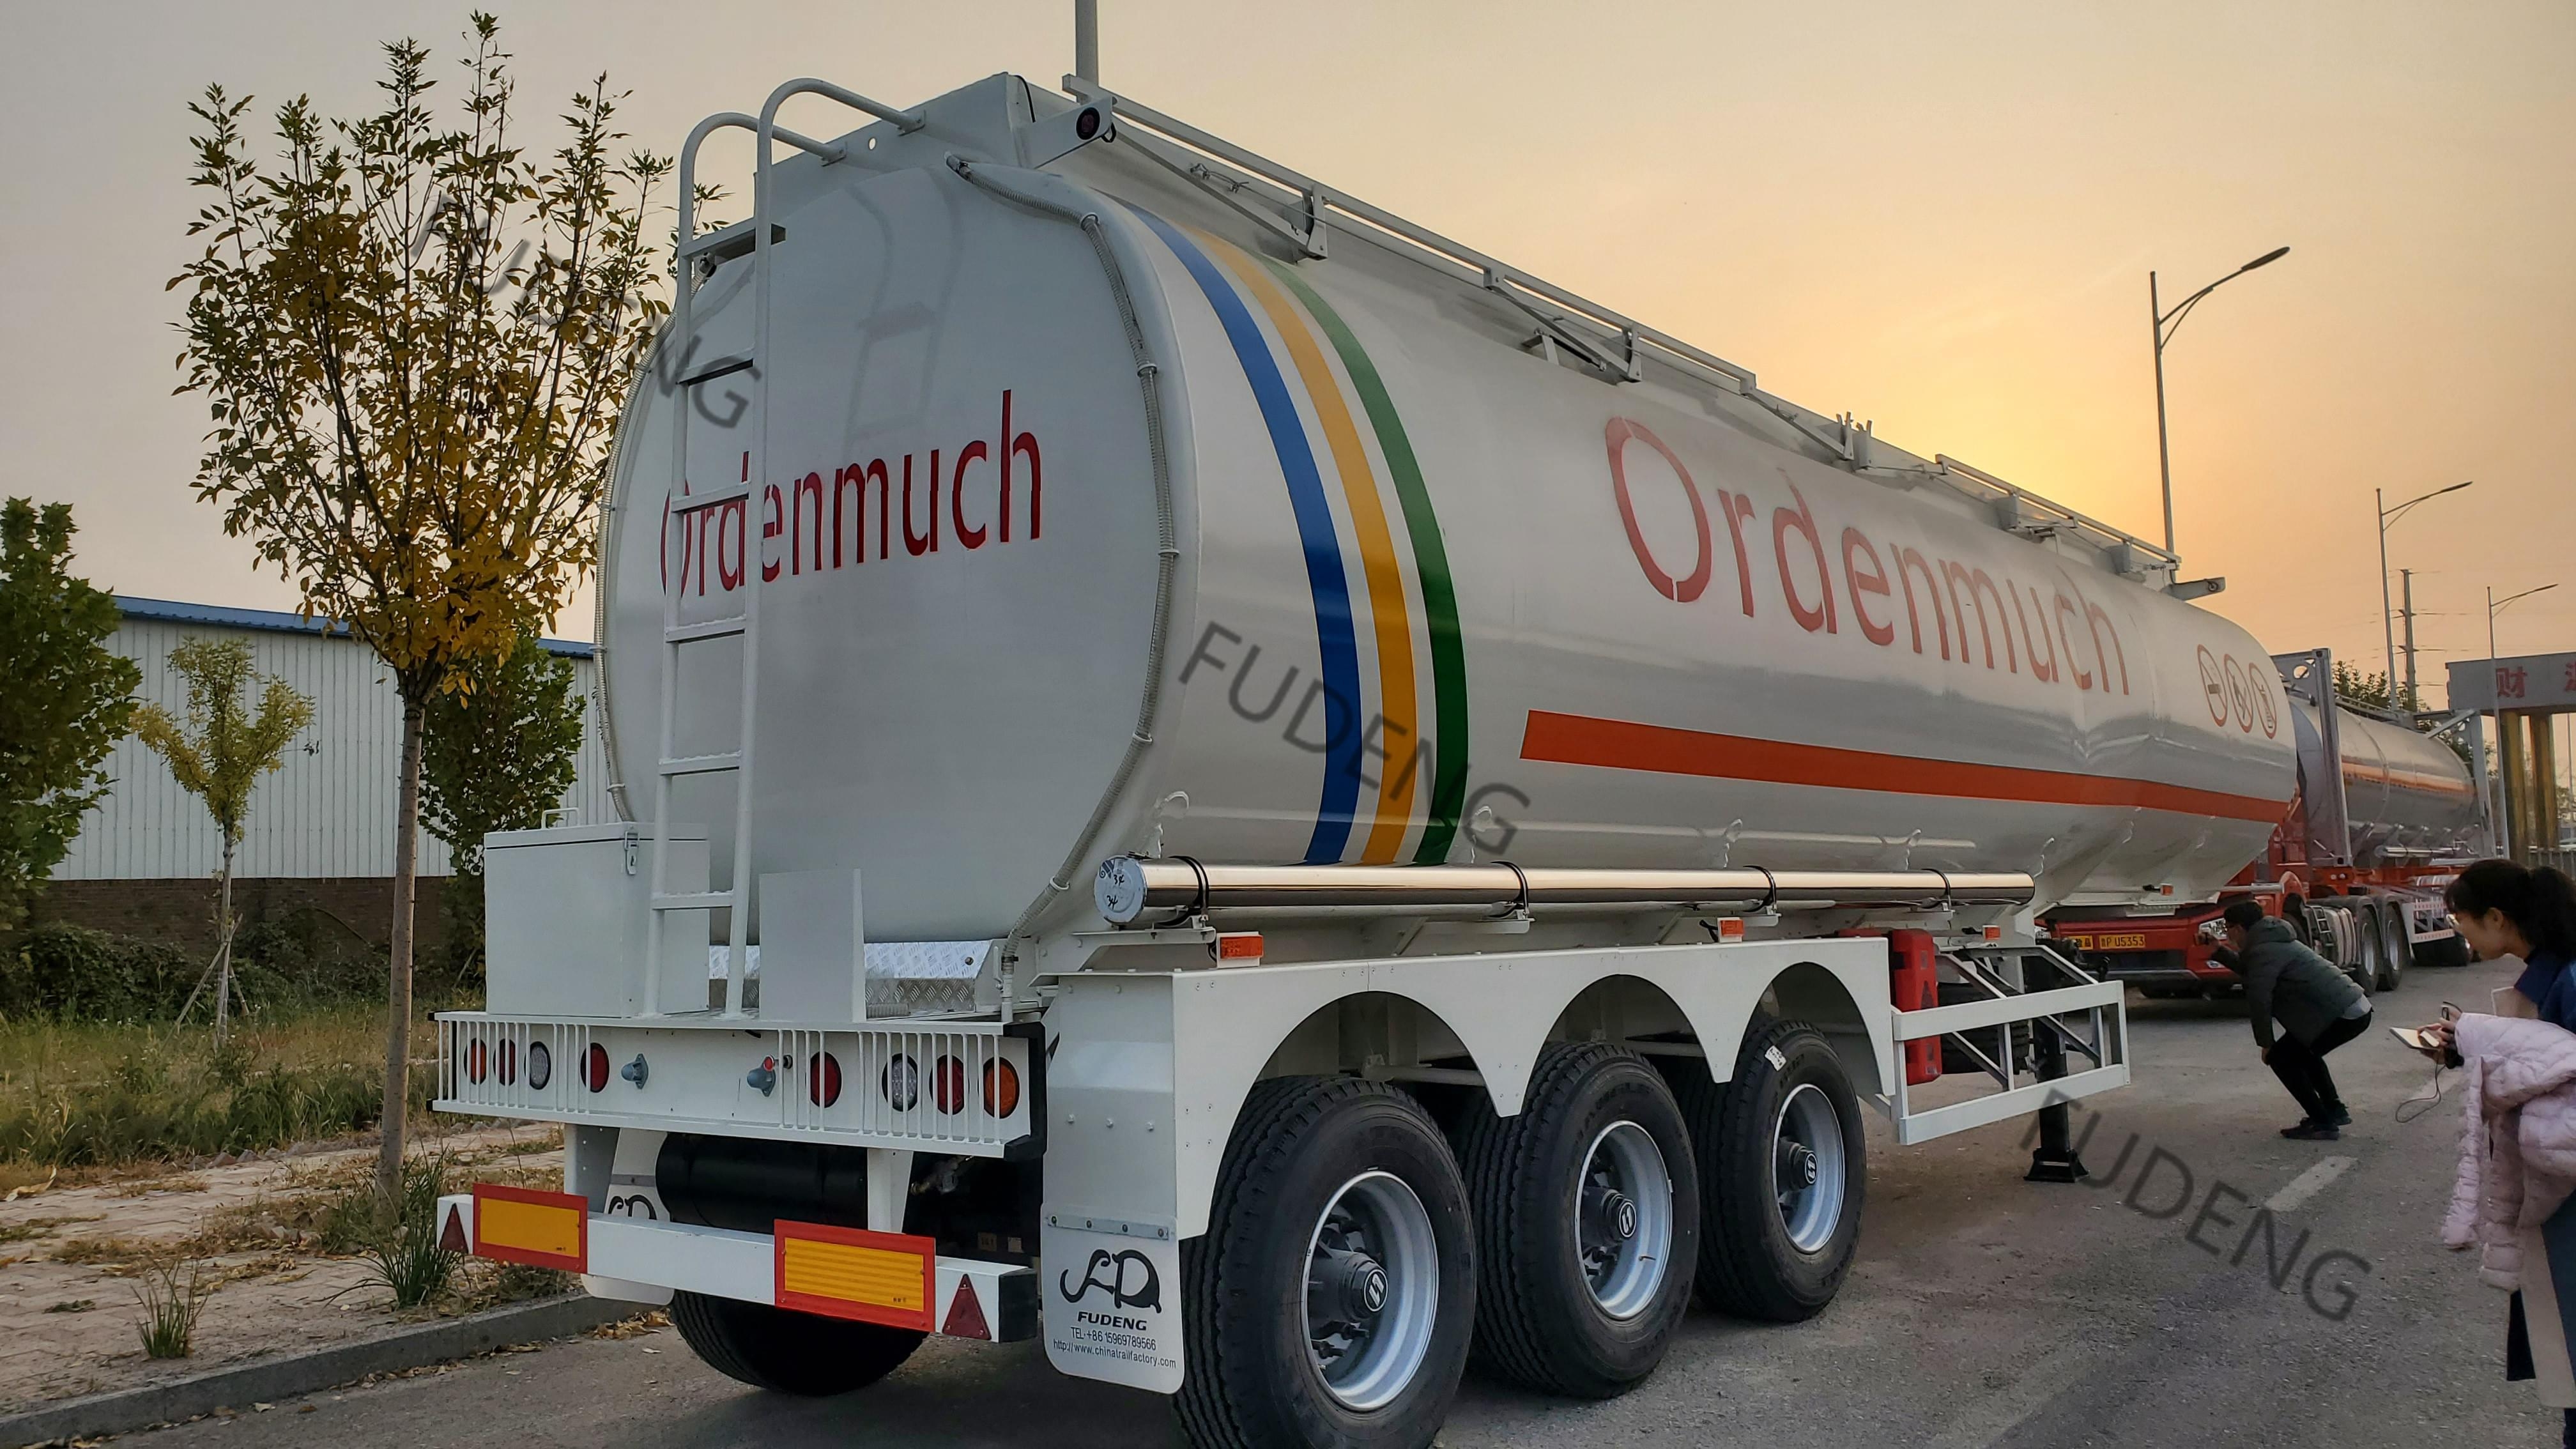 Fudeng aluminum tanker trailer is ready to arrange sea shipping